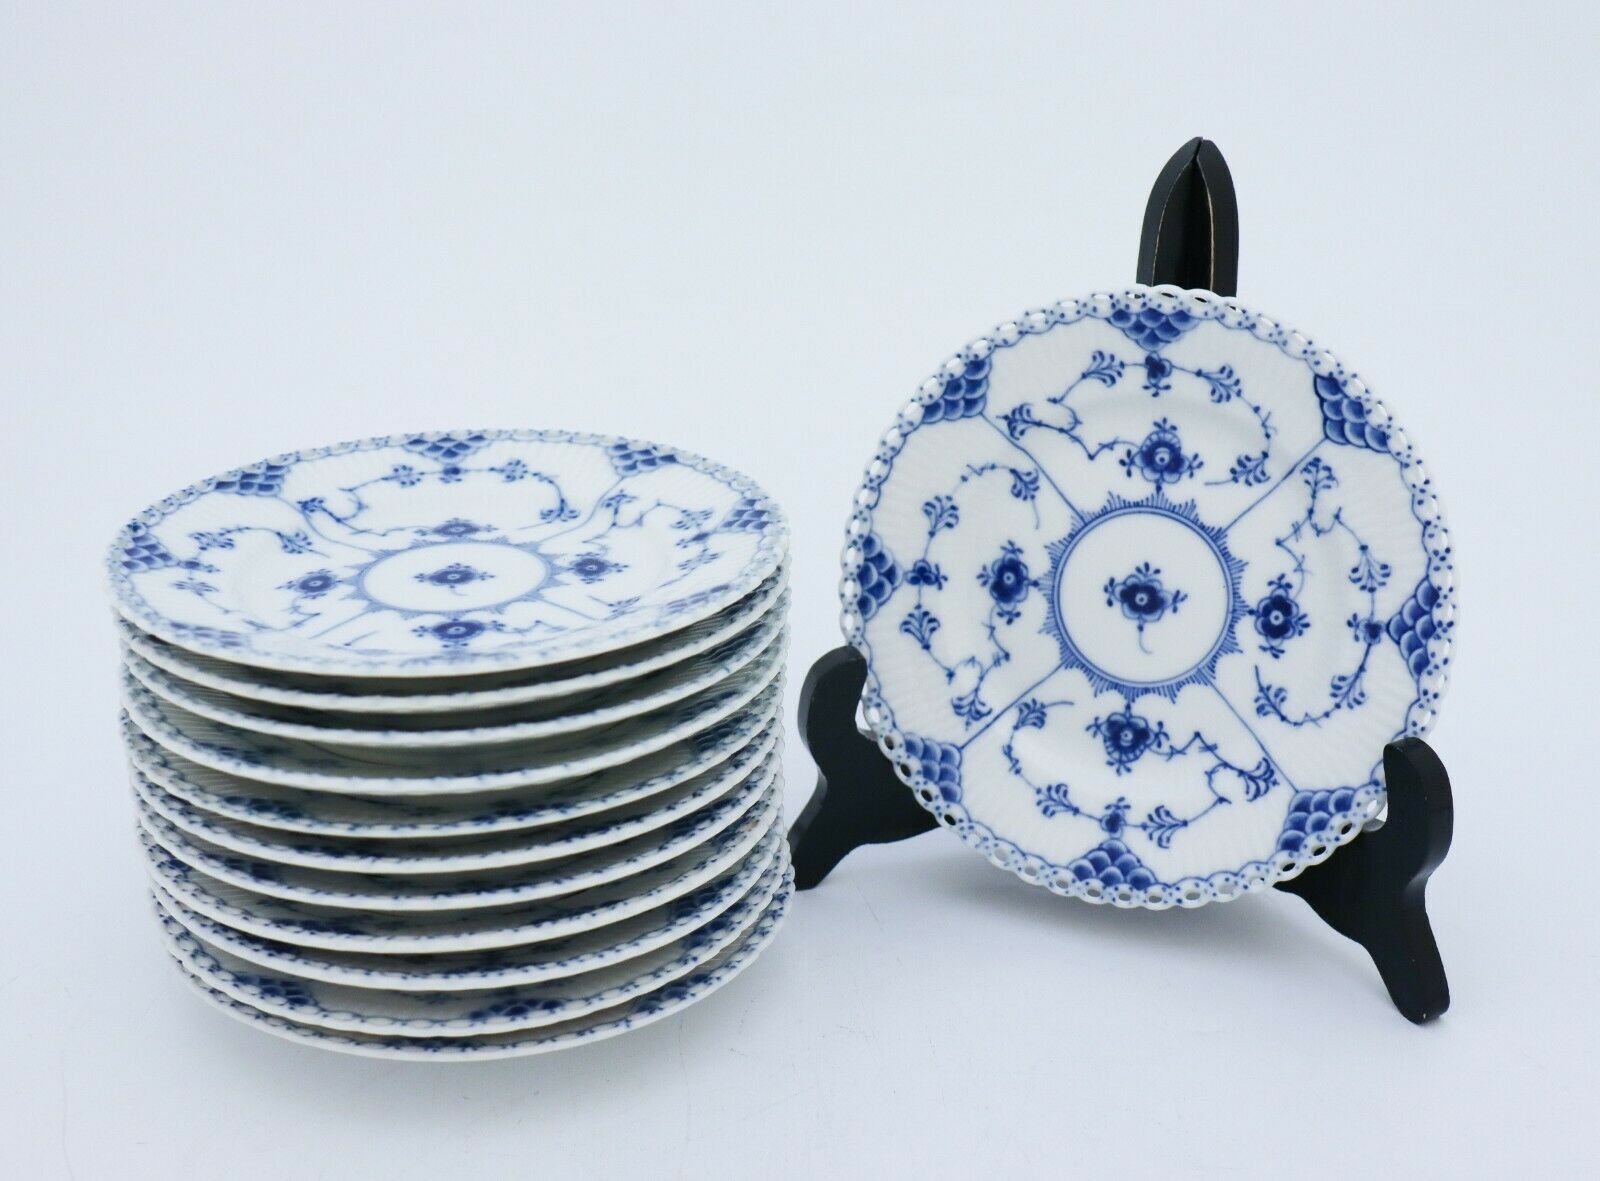 12 Plates #1088 - Blue Fluted - Royal Copenhagen - Full Lace - 1:st Quality